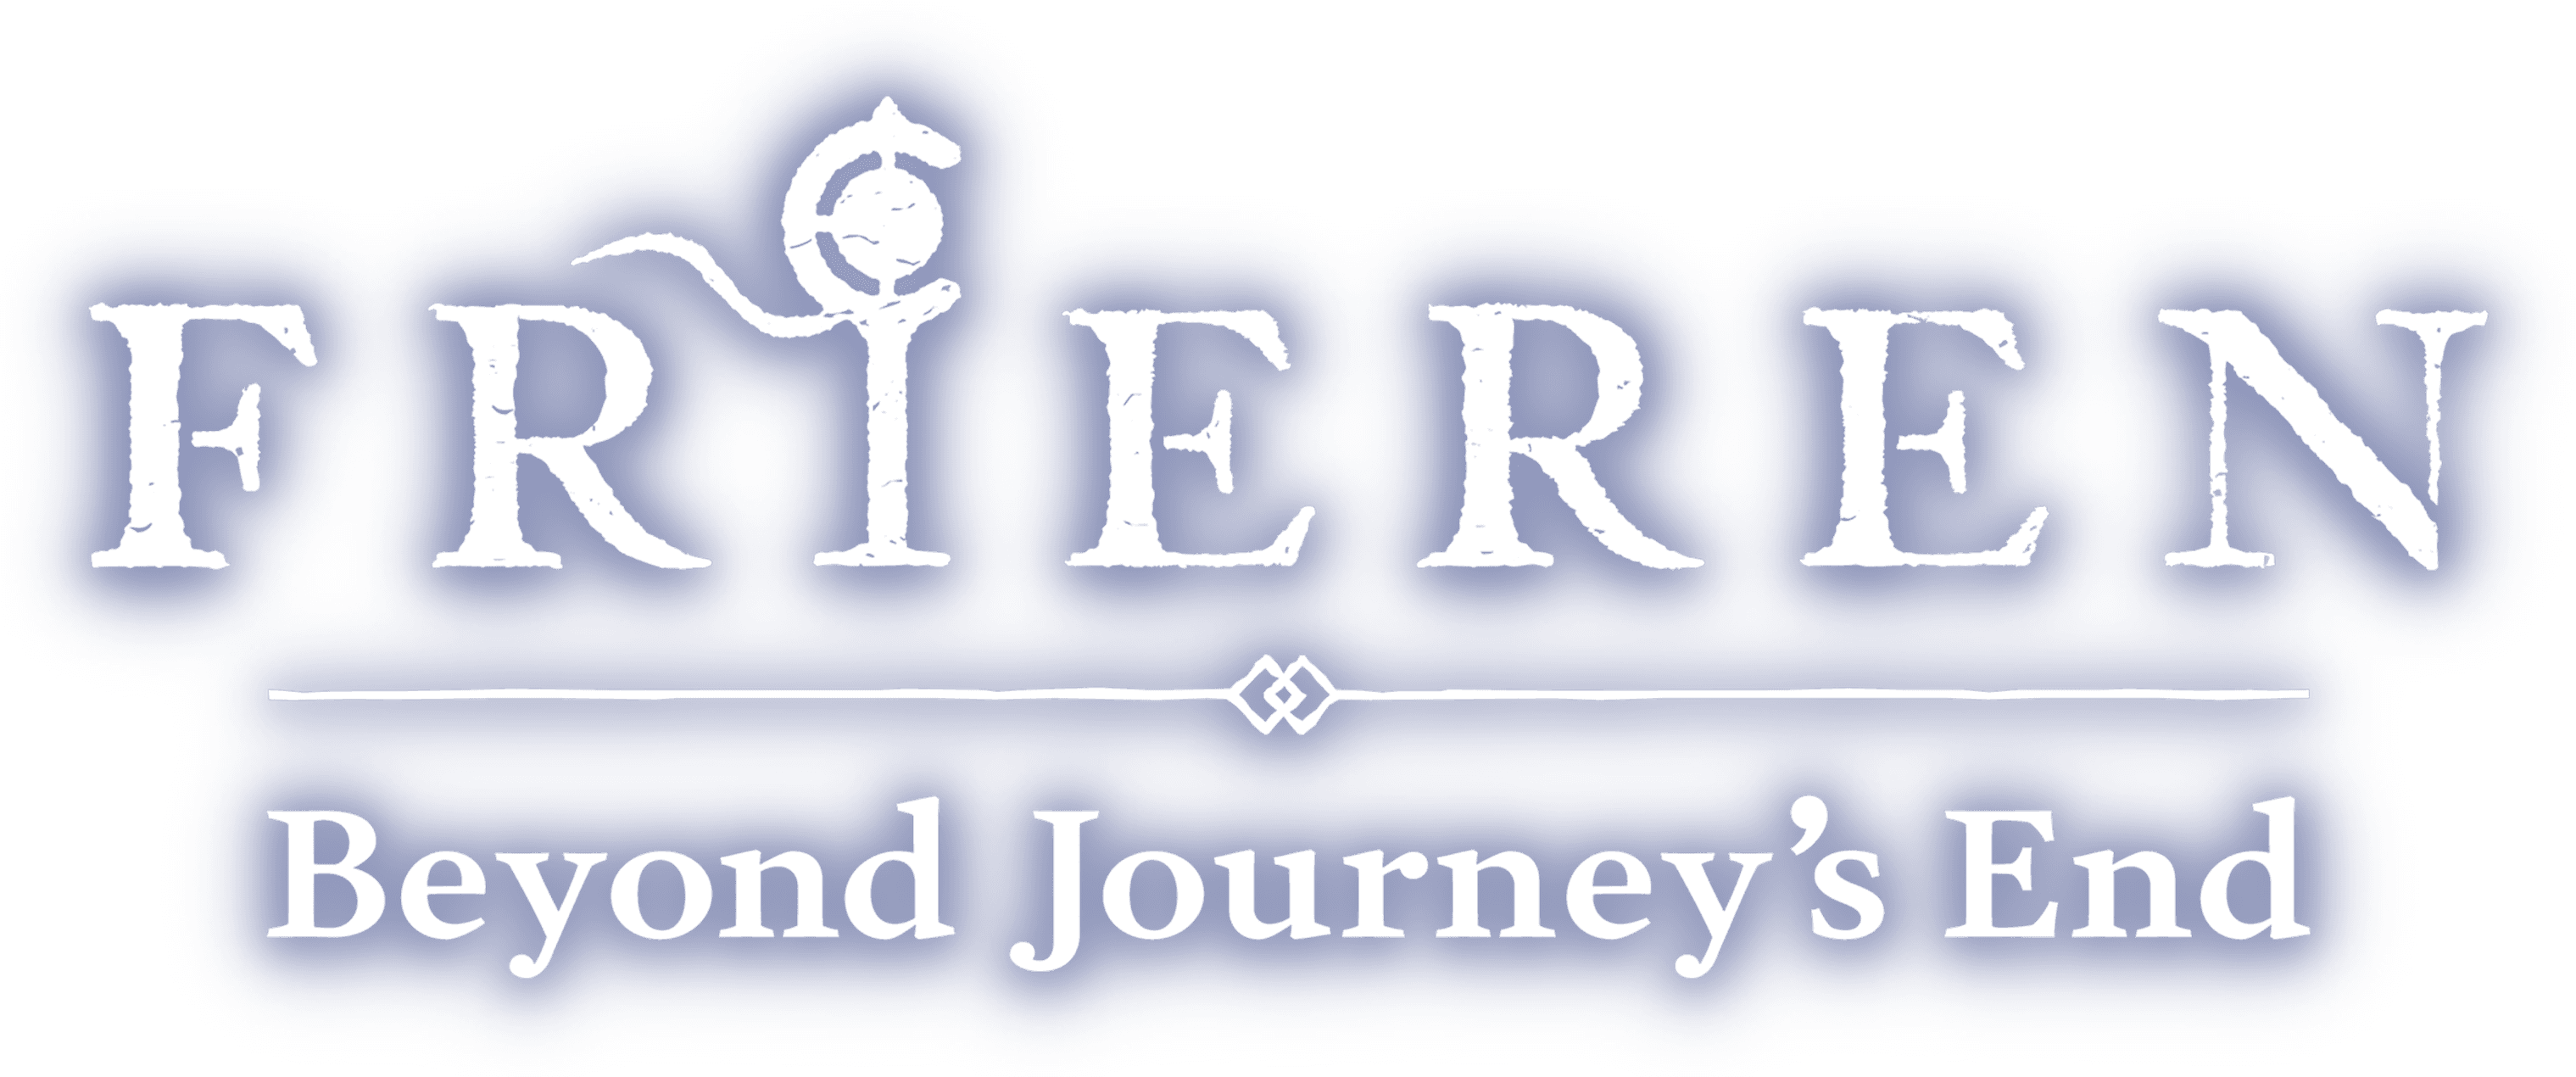 Frieren: Beyond Journey's End logo